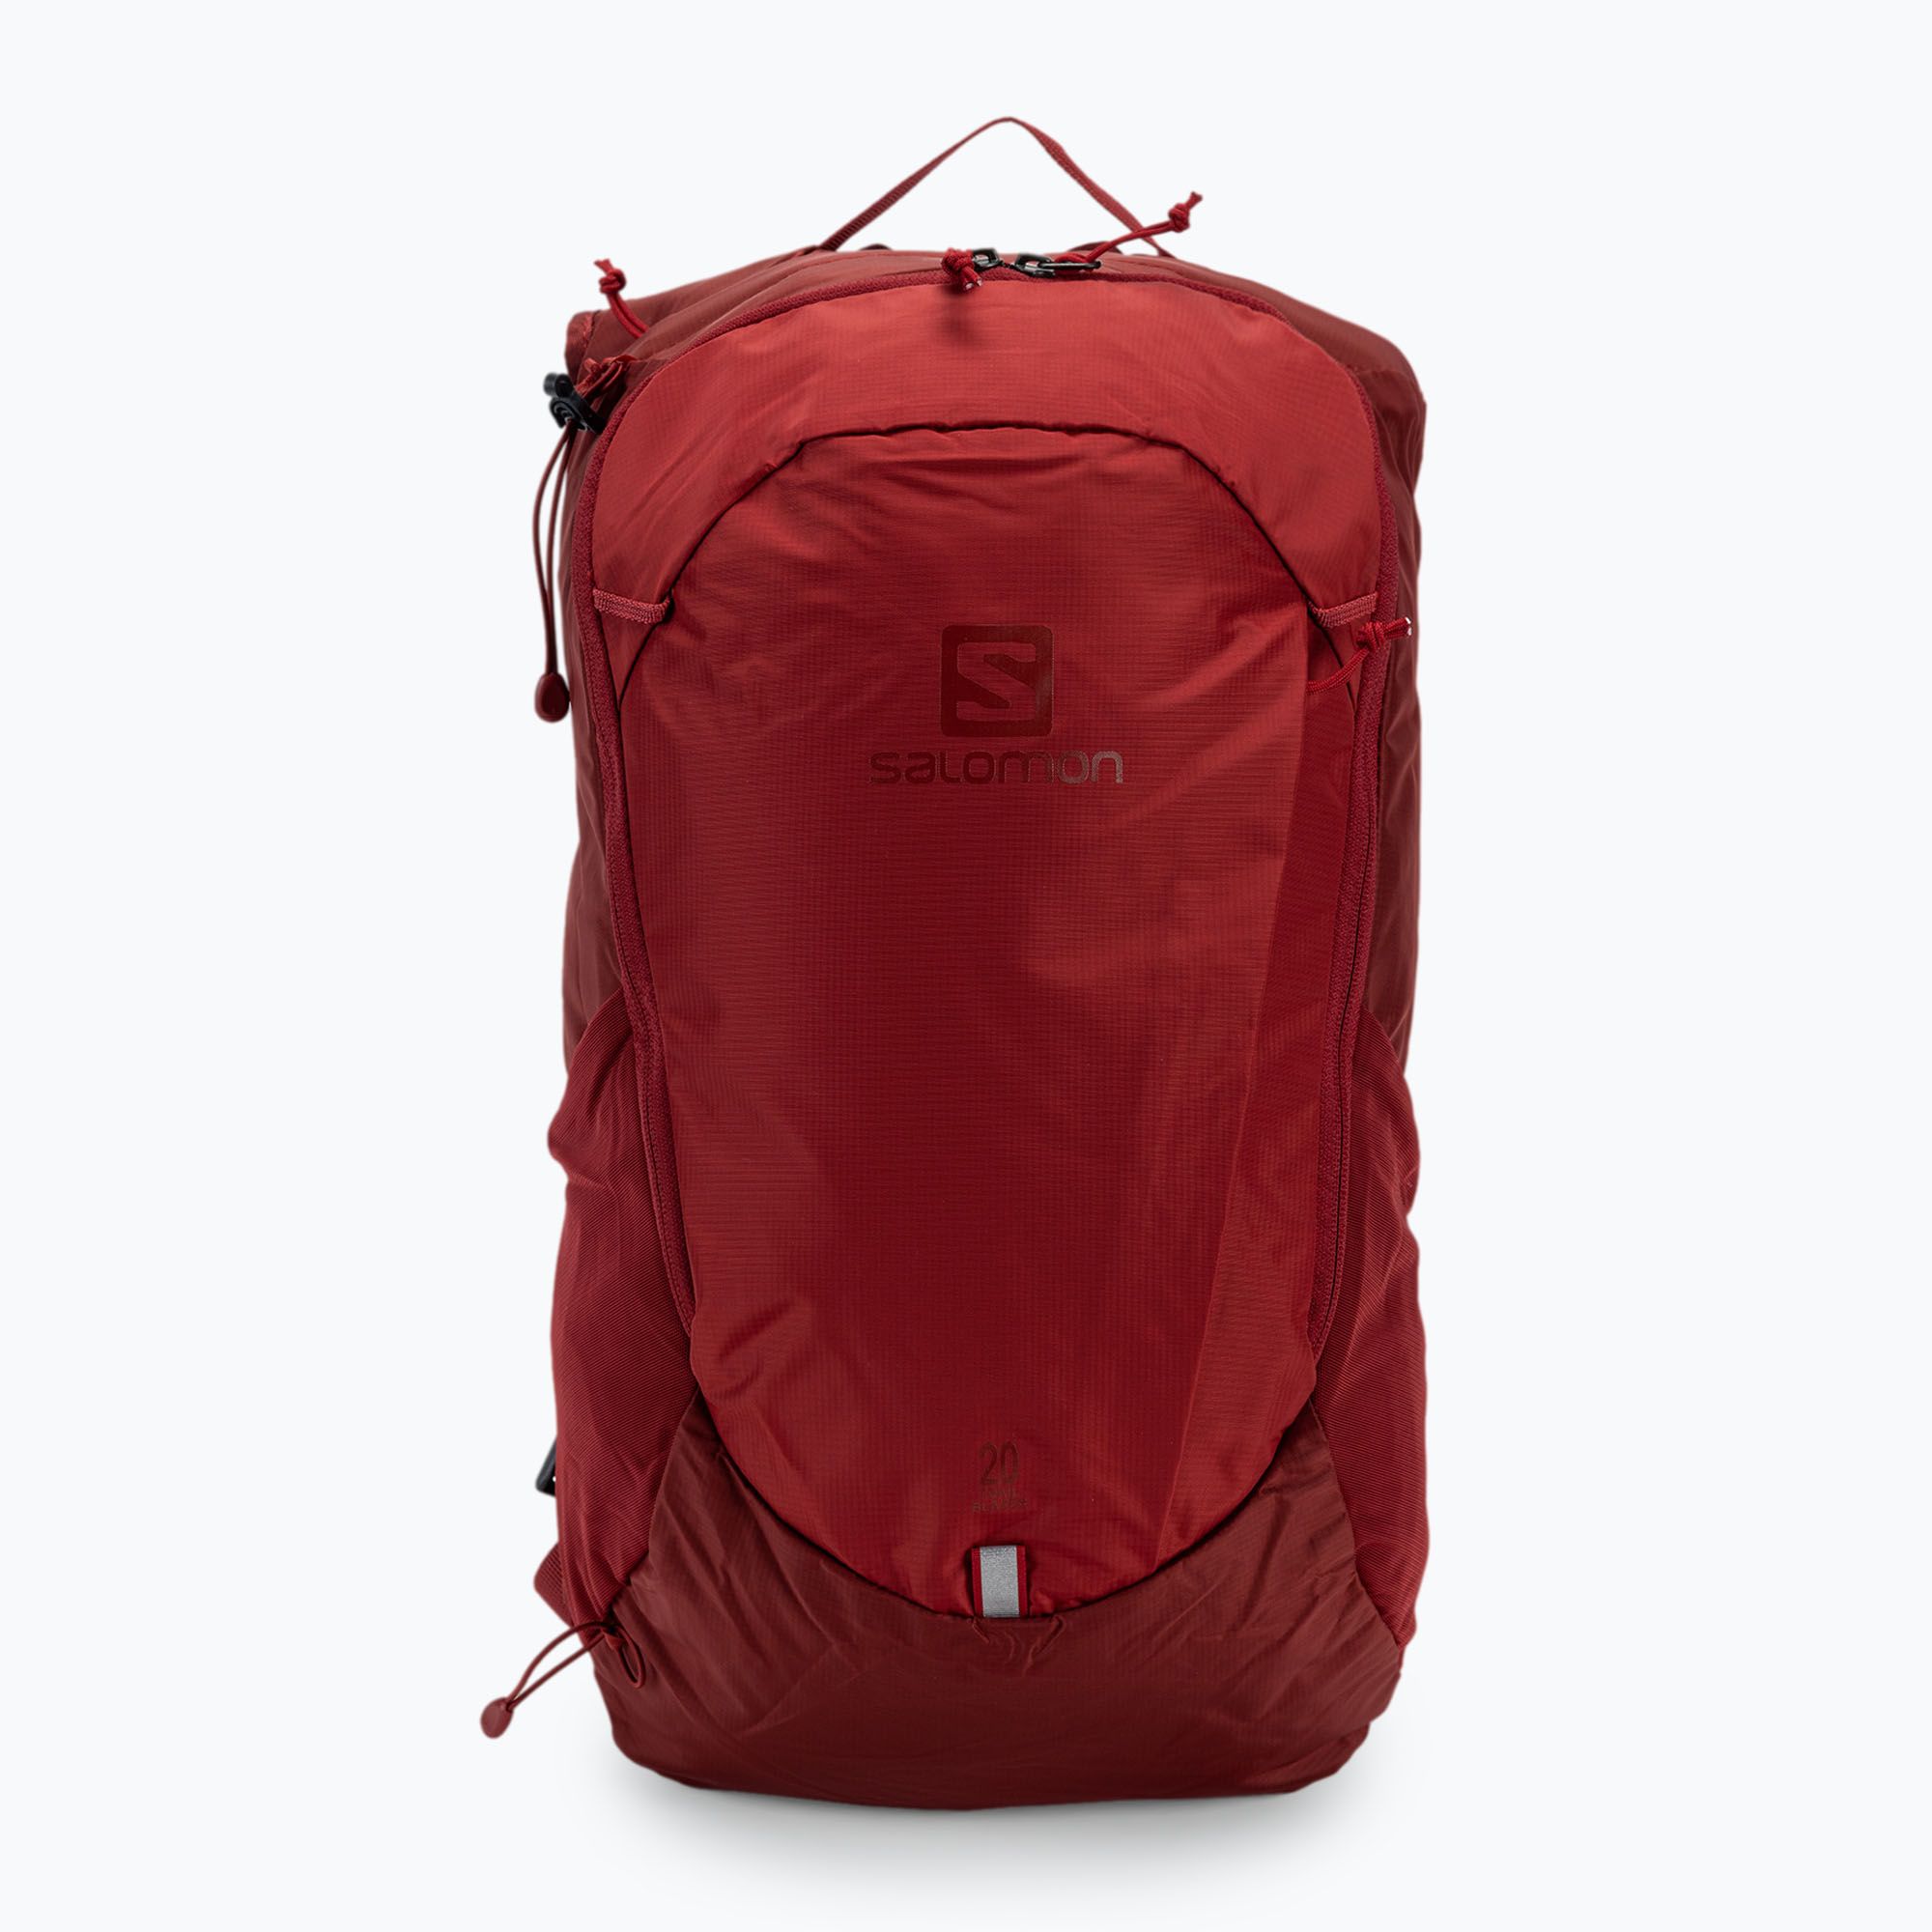 Salomon 20 hiking backpack - Sportano.com